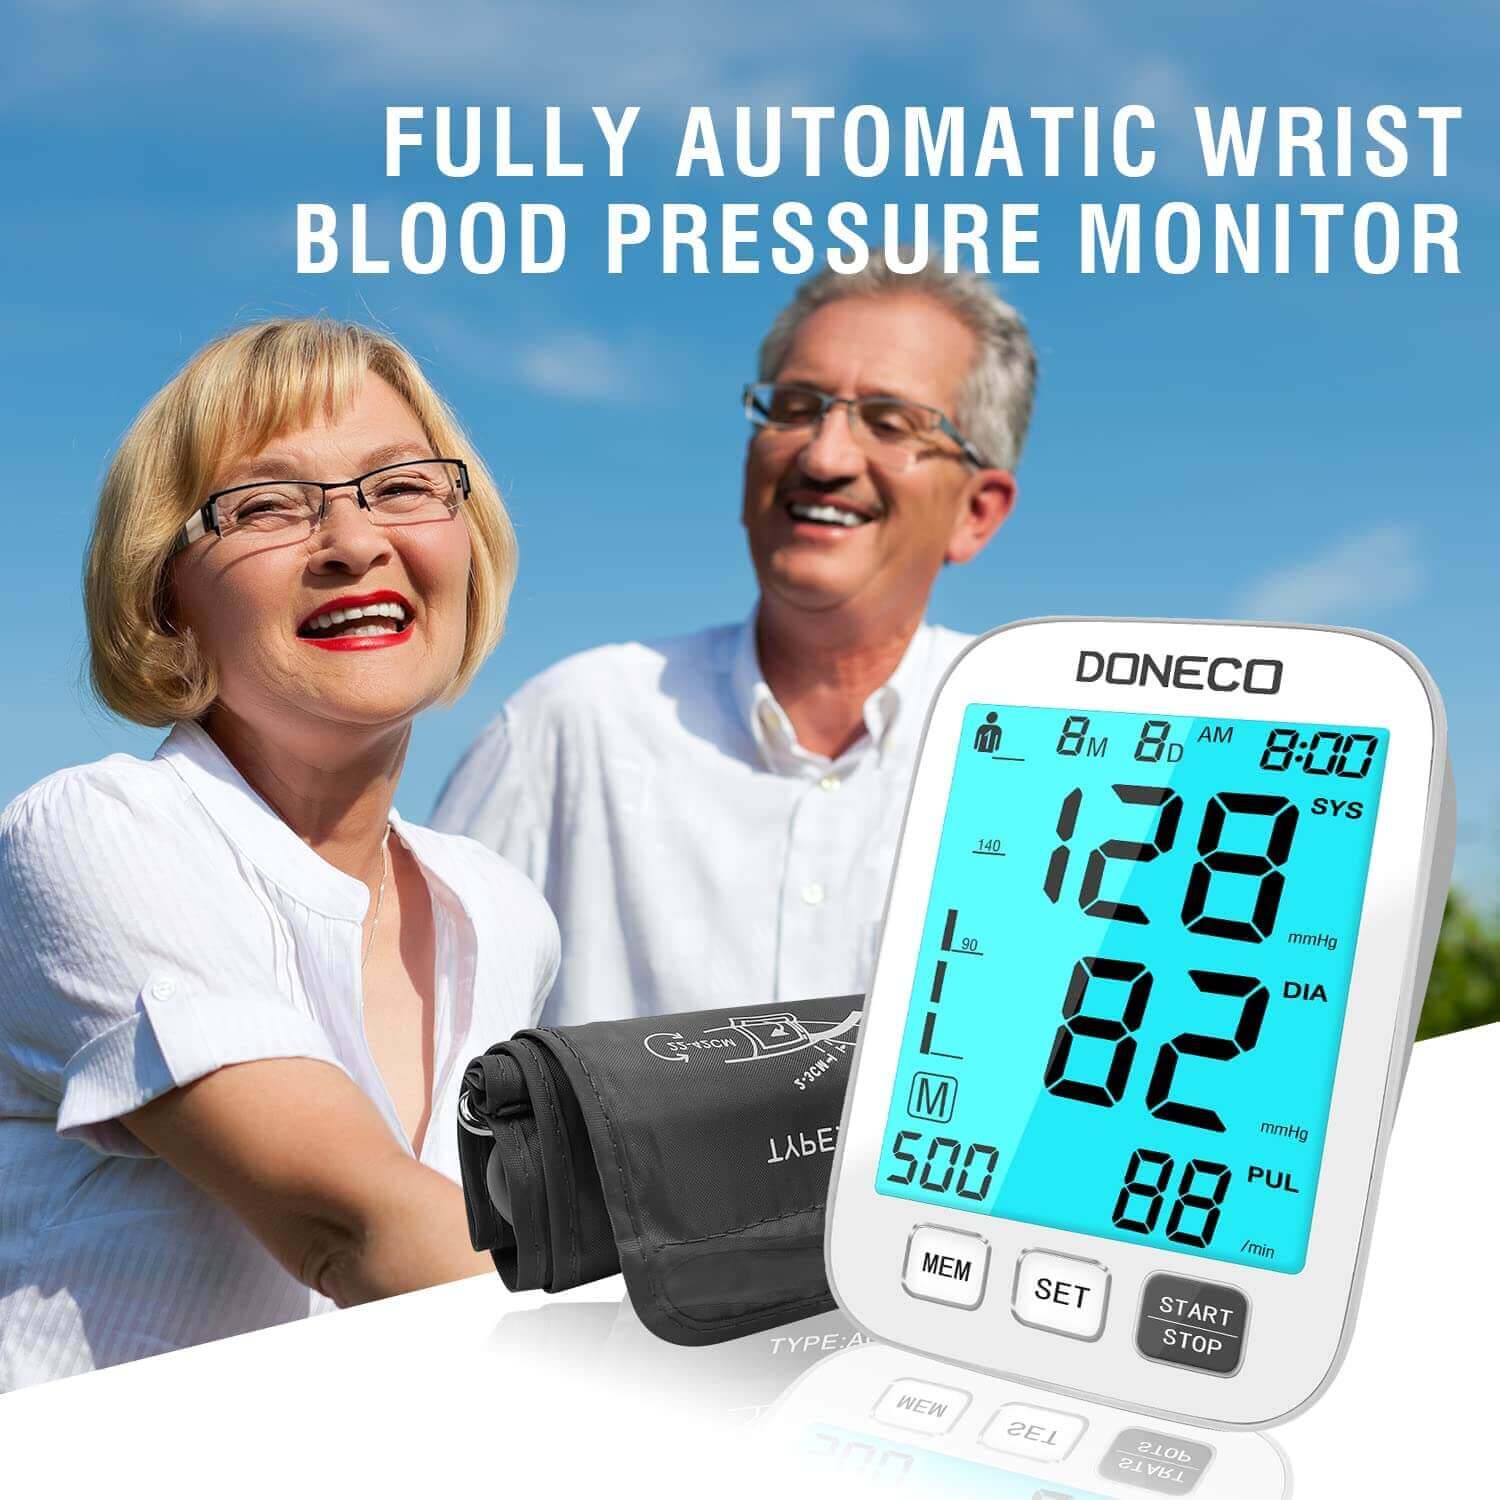 https://www.mydoneco.com/arm-monitor/blood-pressure-monitor-2x500/blood-pressure-monitor-upper-arm-automatic-digital-bp-monitor-adjustable-large-cuff-backlit-display-2x500_fully-automatic-wrist-blood-pressure-monitor.jpg